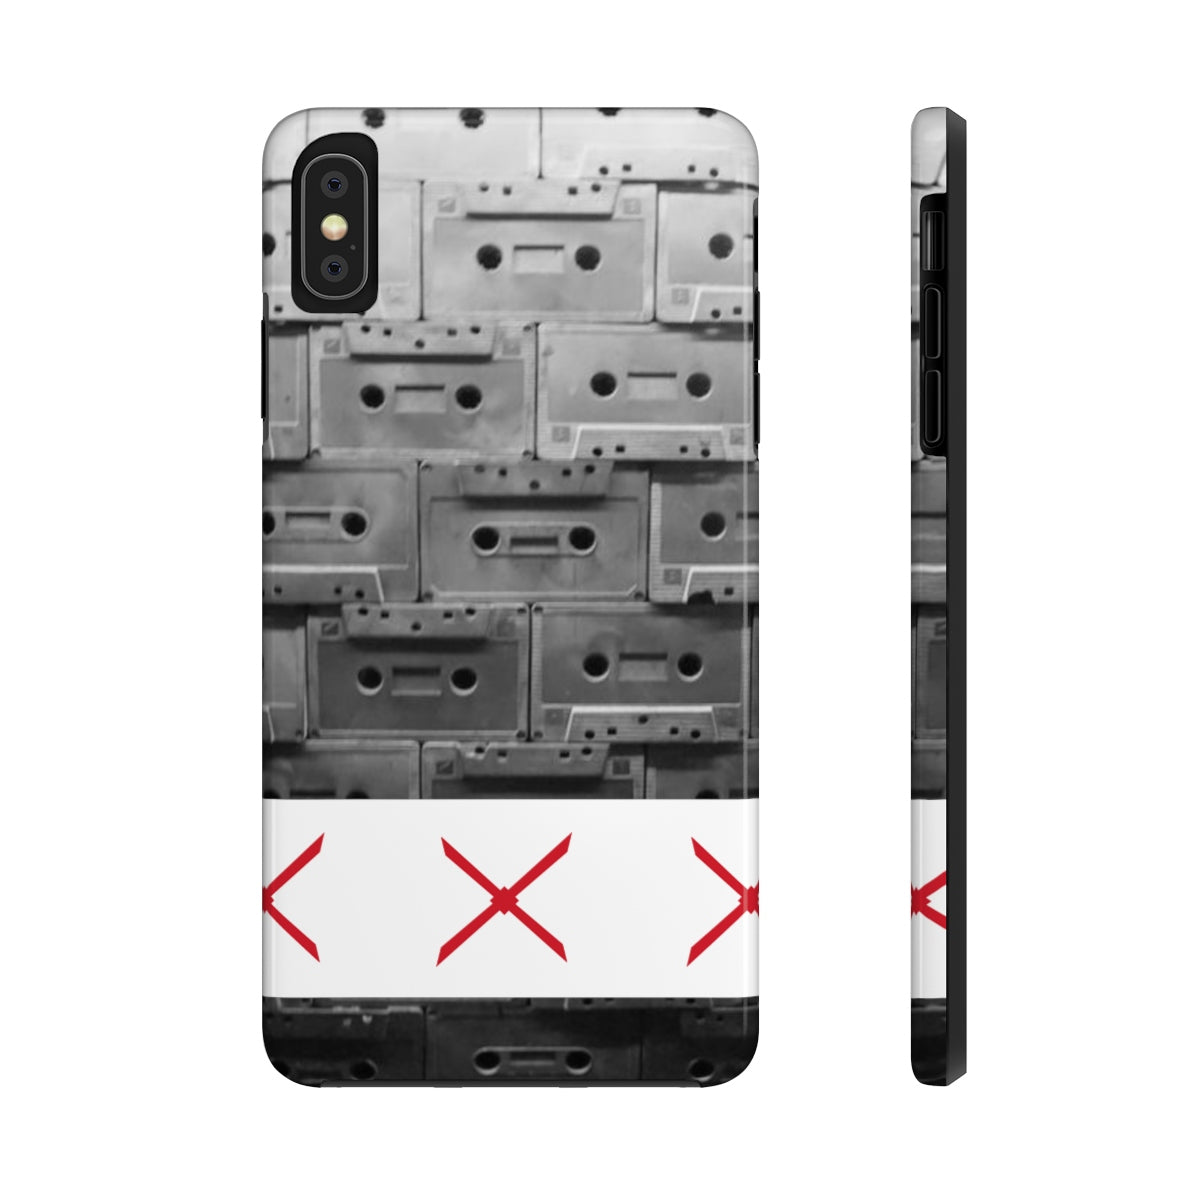 greycassette Tough Phone Cases